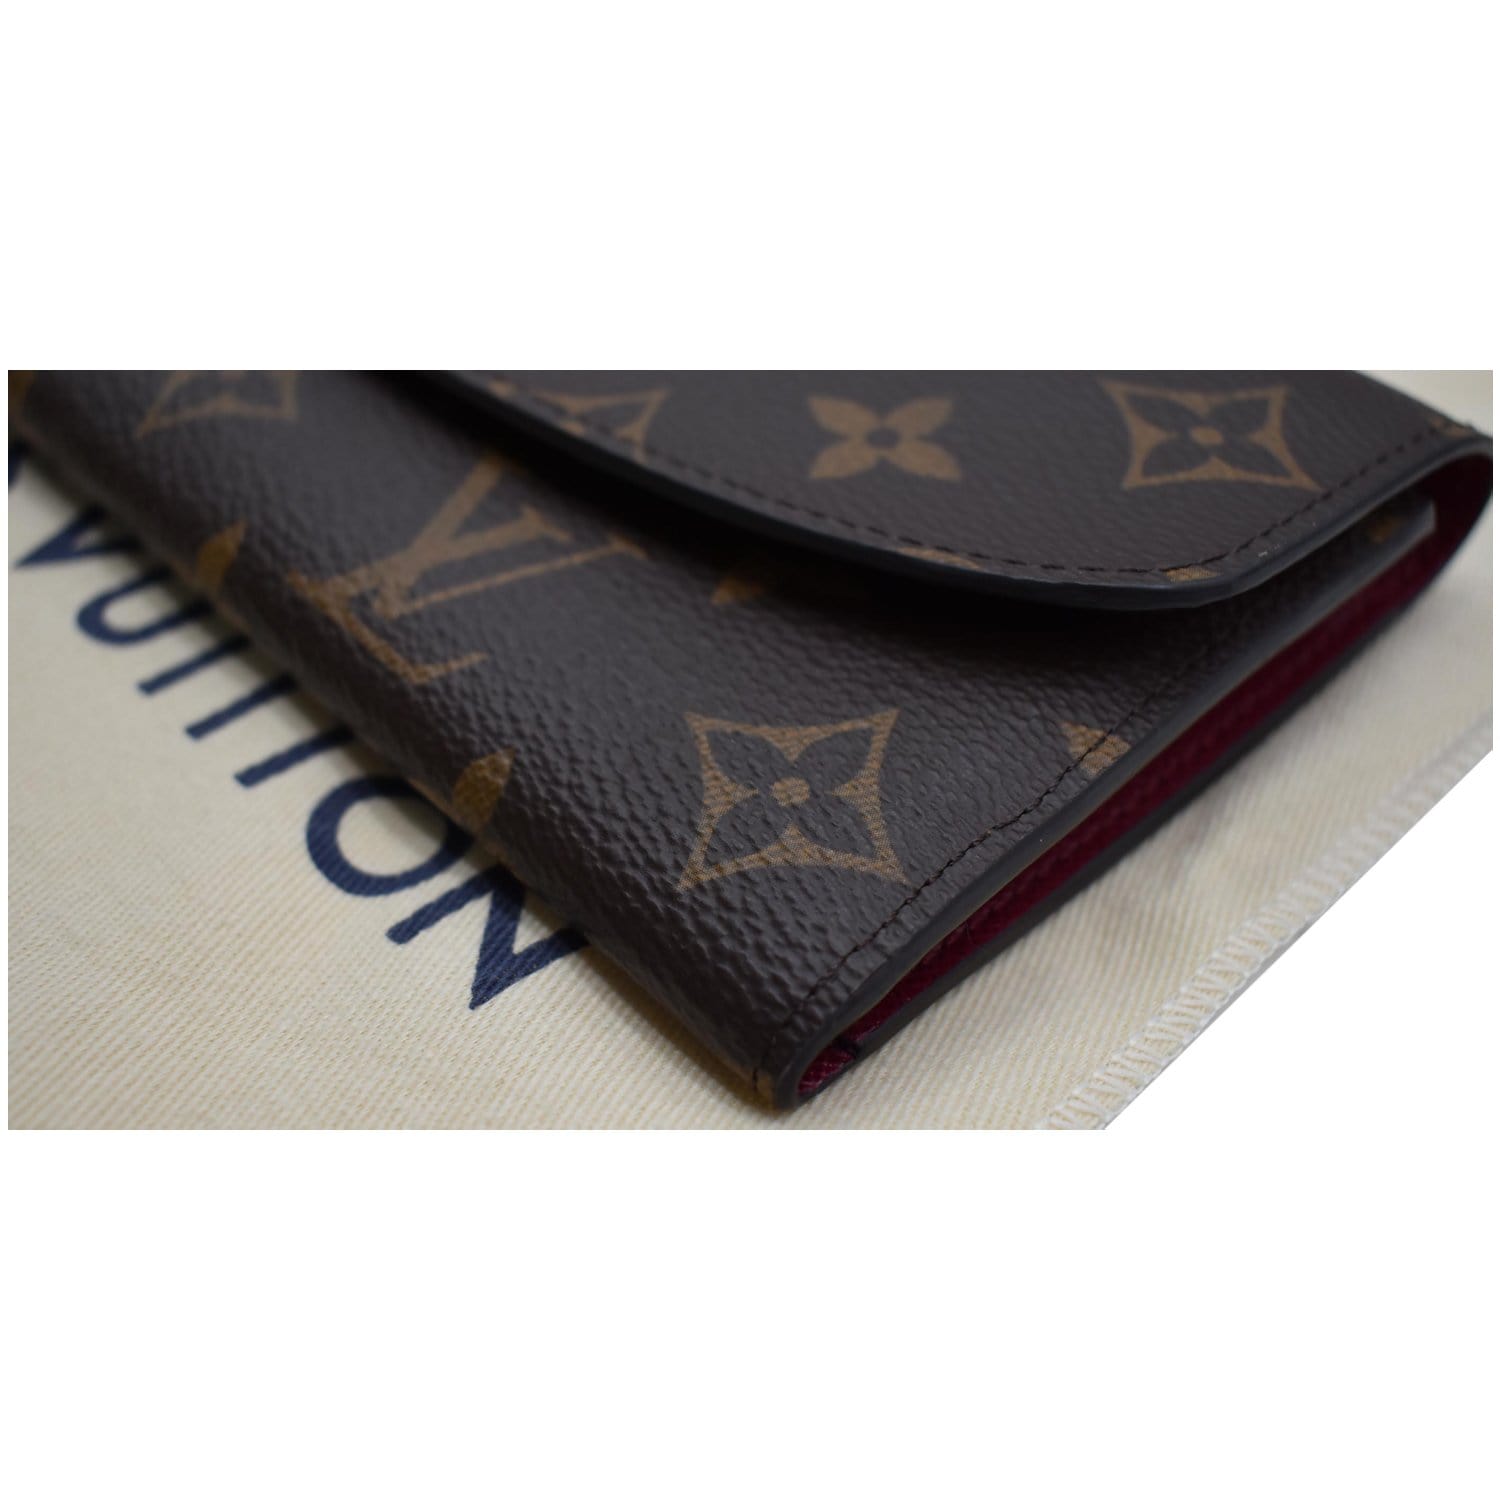 Louis Vuitton, Bags, Louis Vuitton Monogram Emilie Fuchsia Wallet